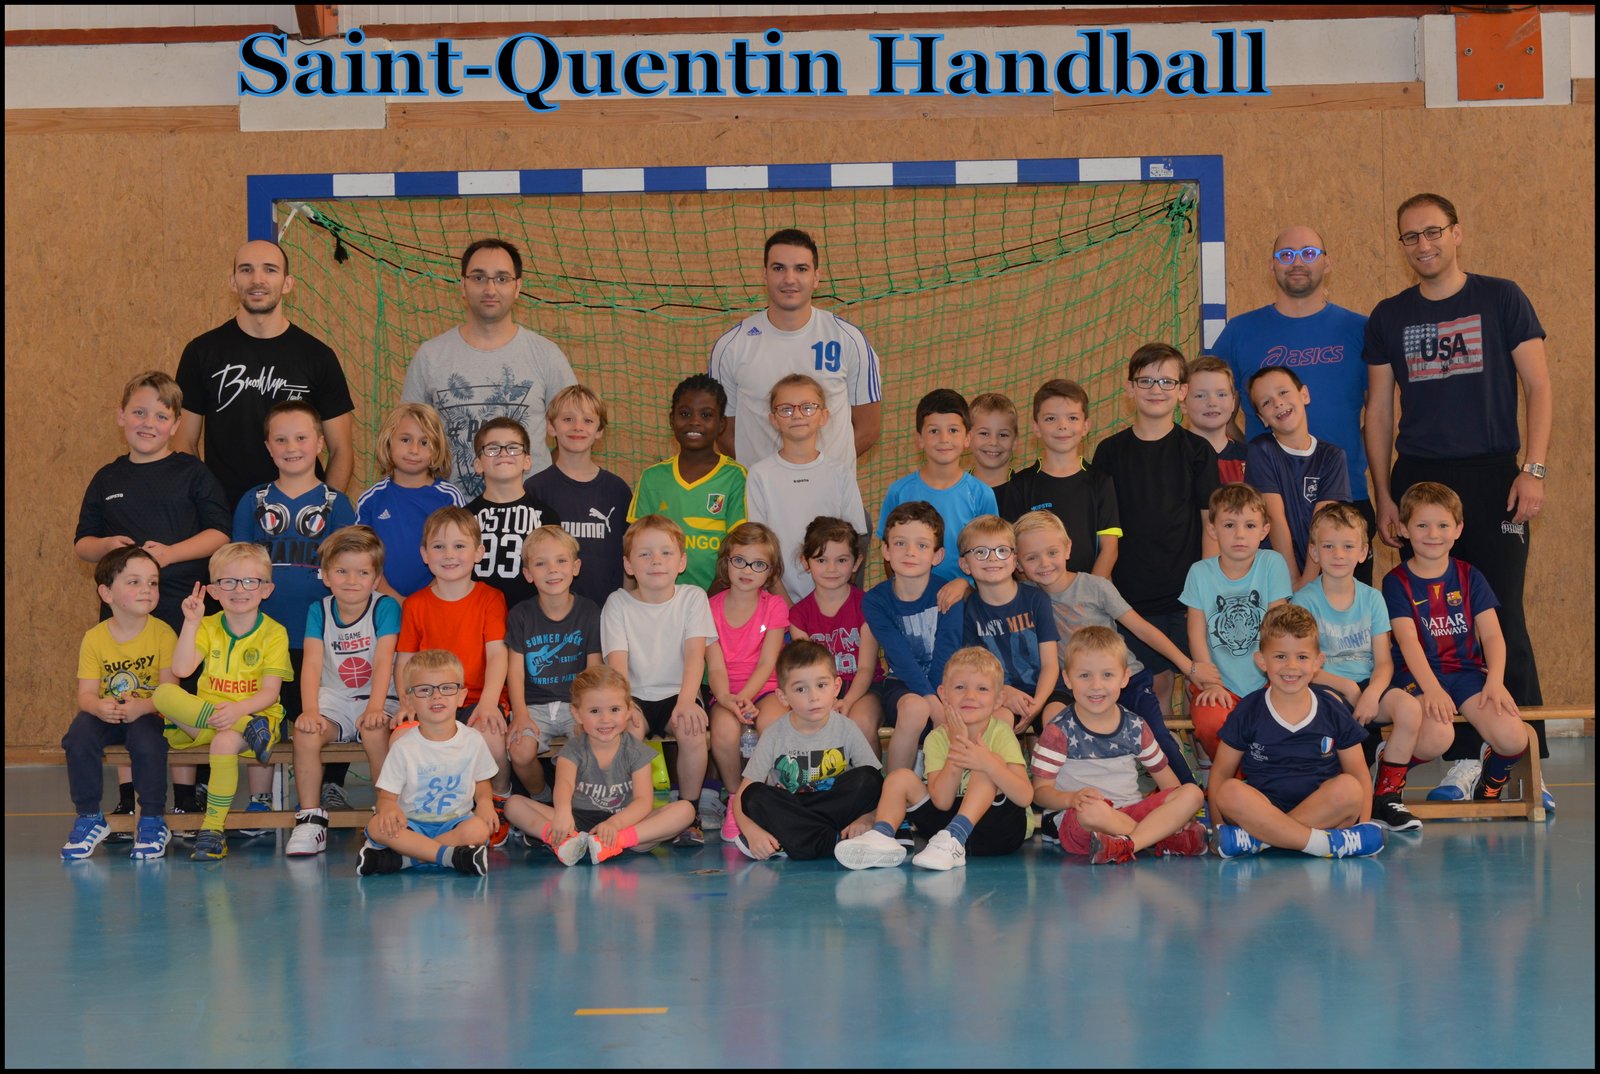 Baby Hand – Saint-Quentin Handball